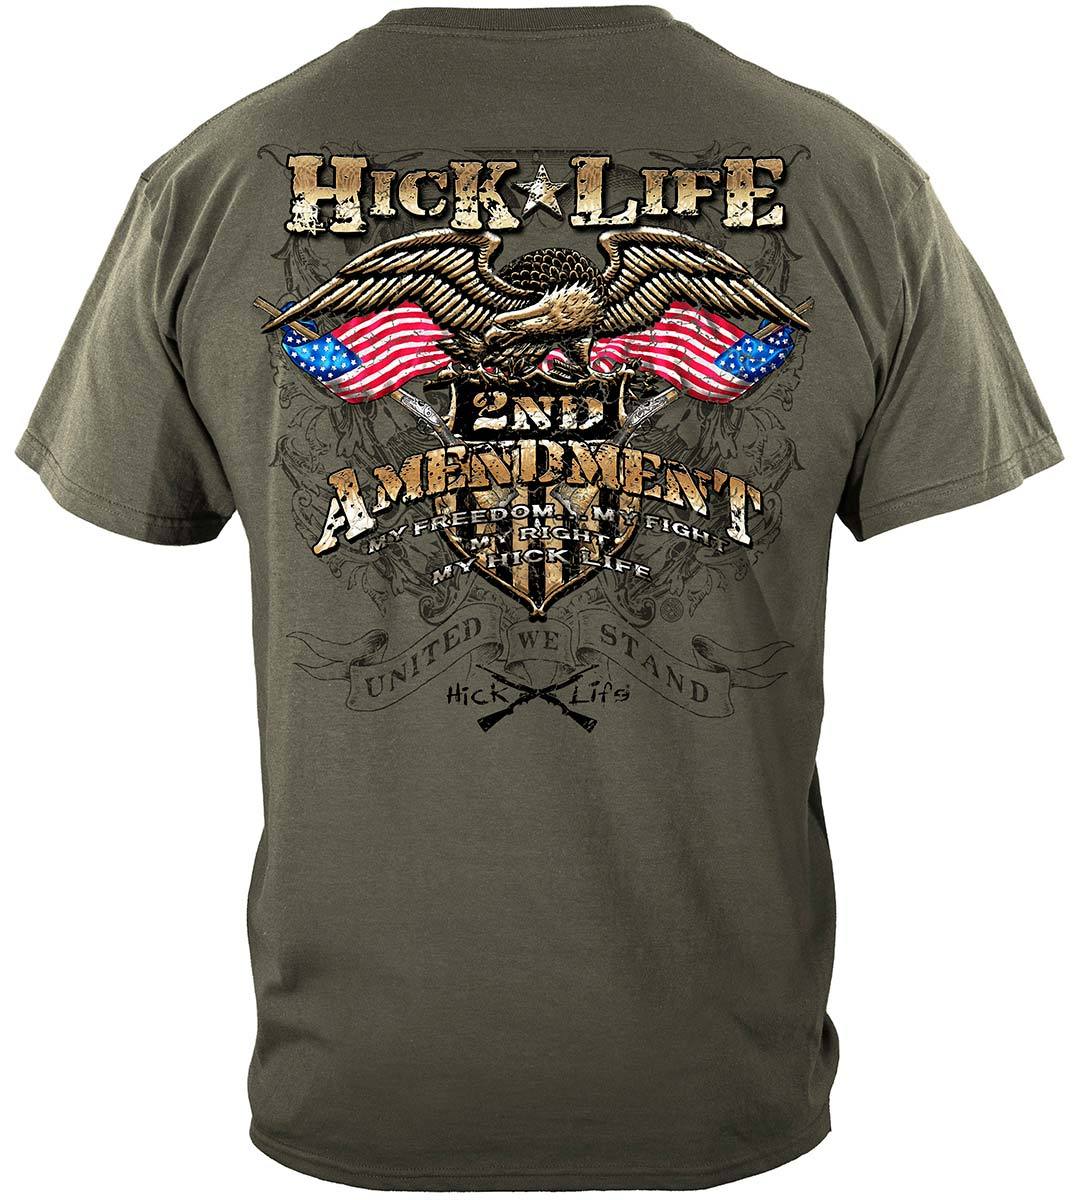 2nd Amendment Premium T-Shirt